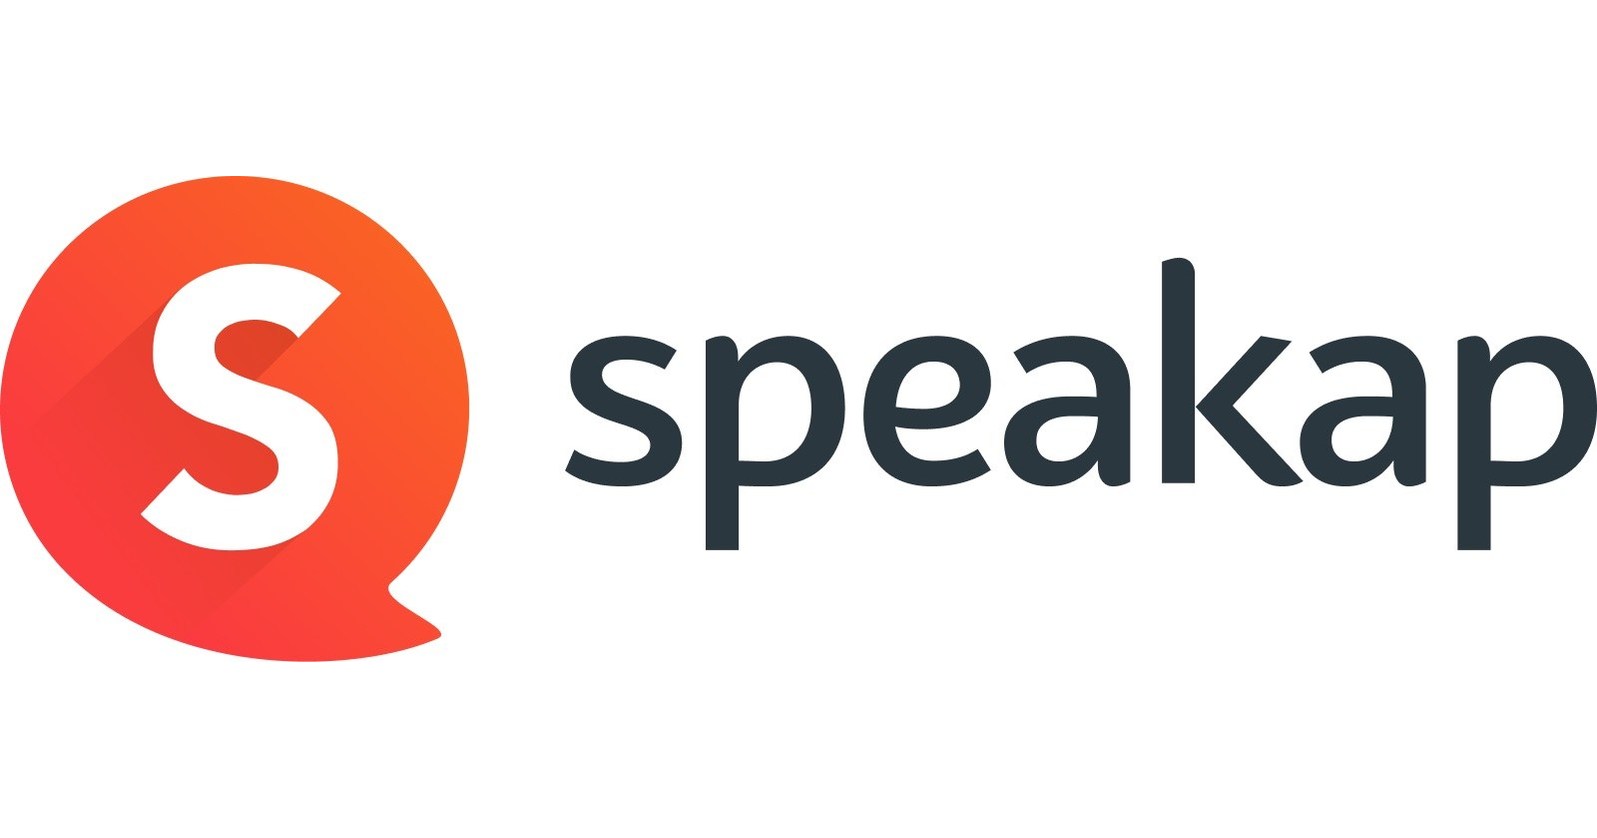 Speakap logo